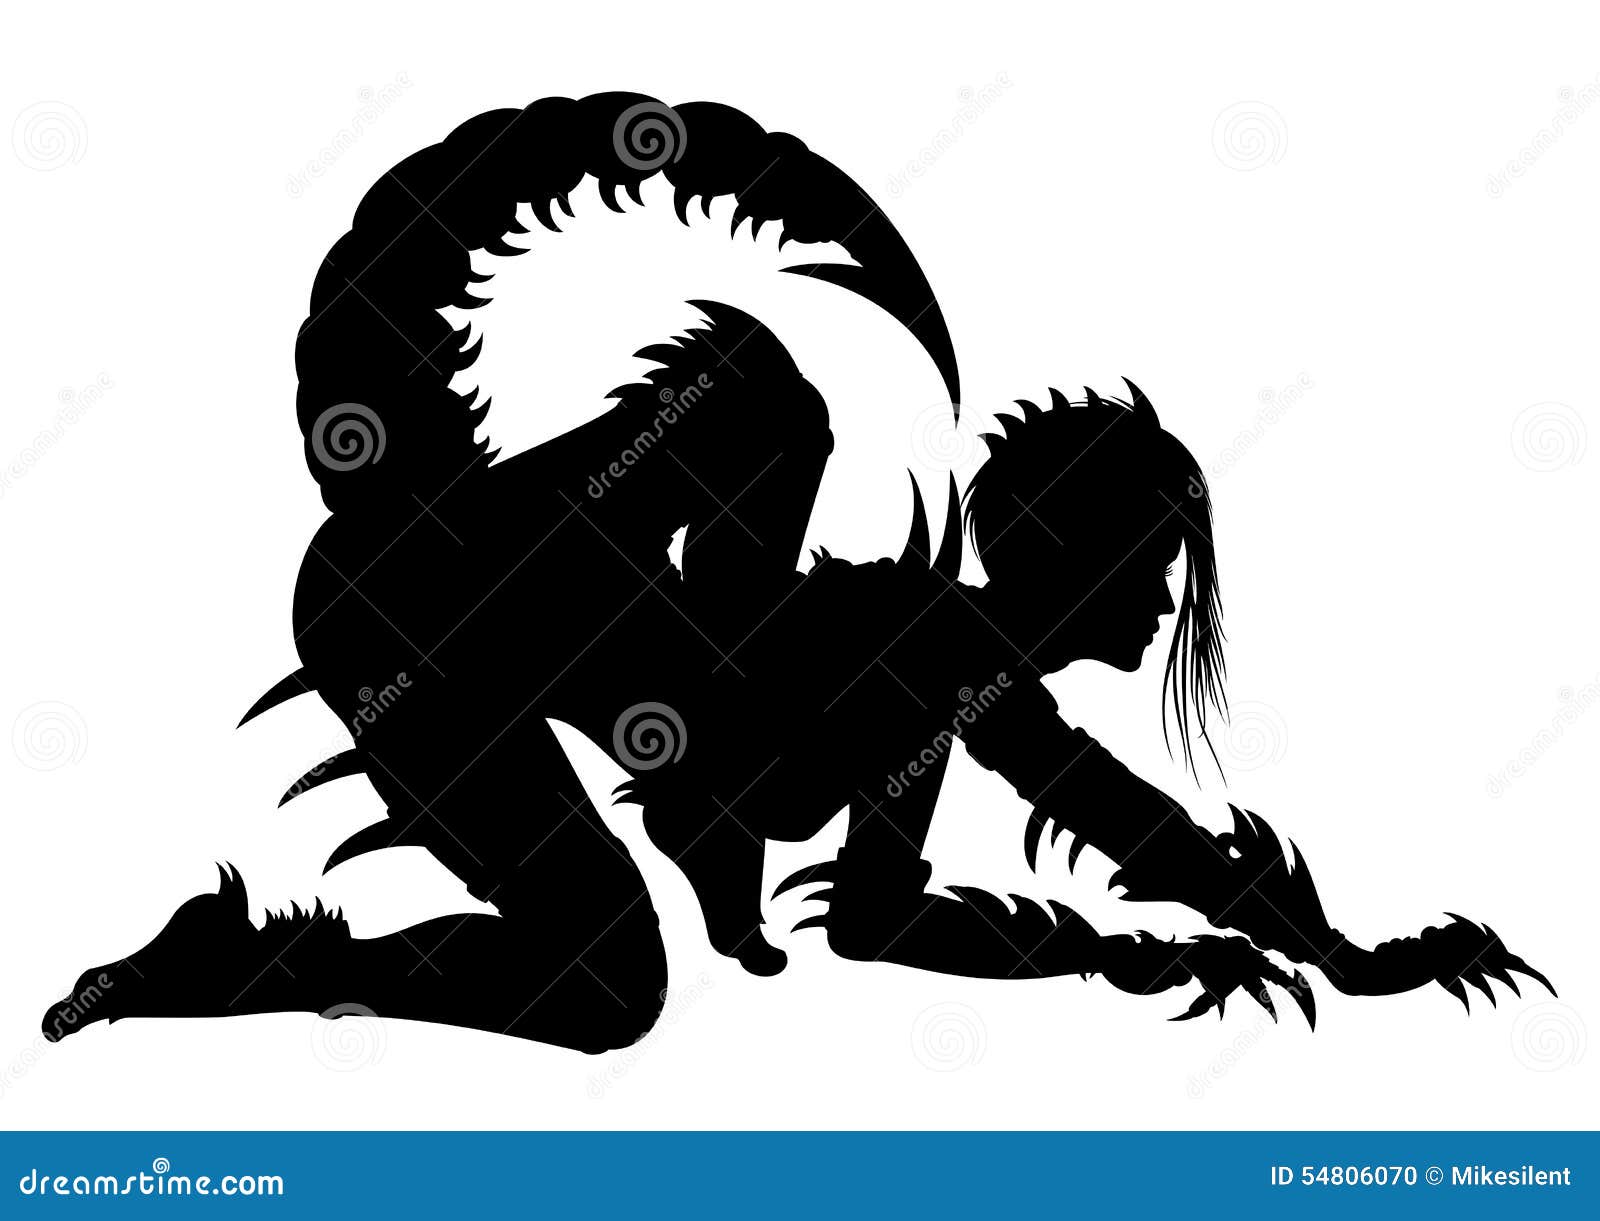 woman scorpio silhouette